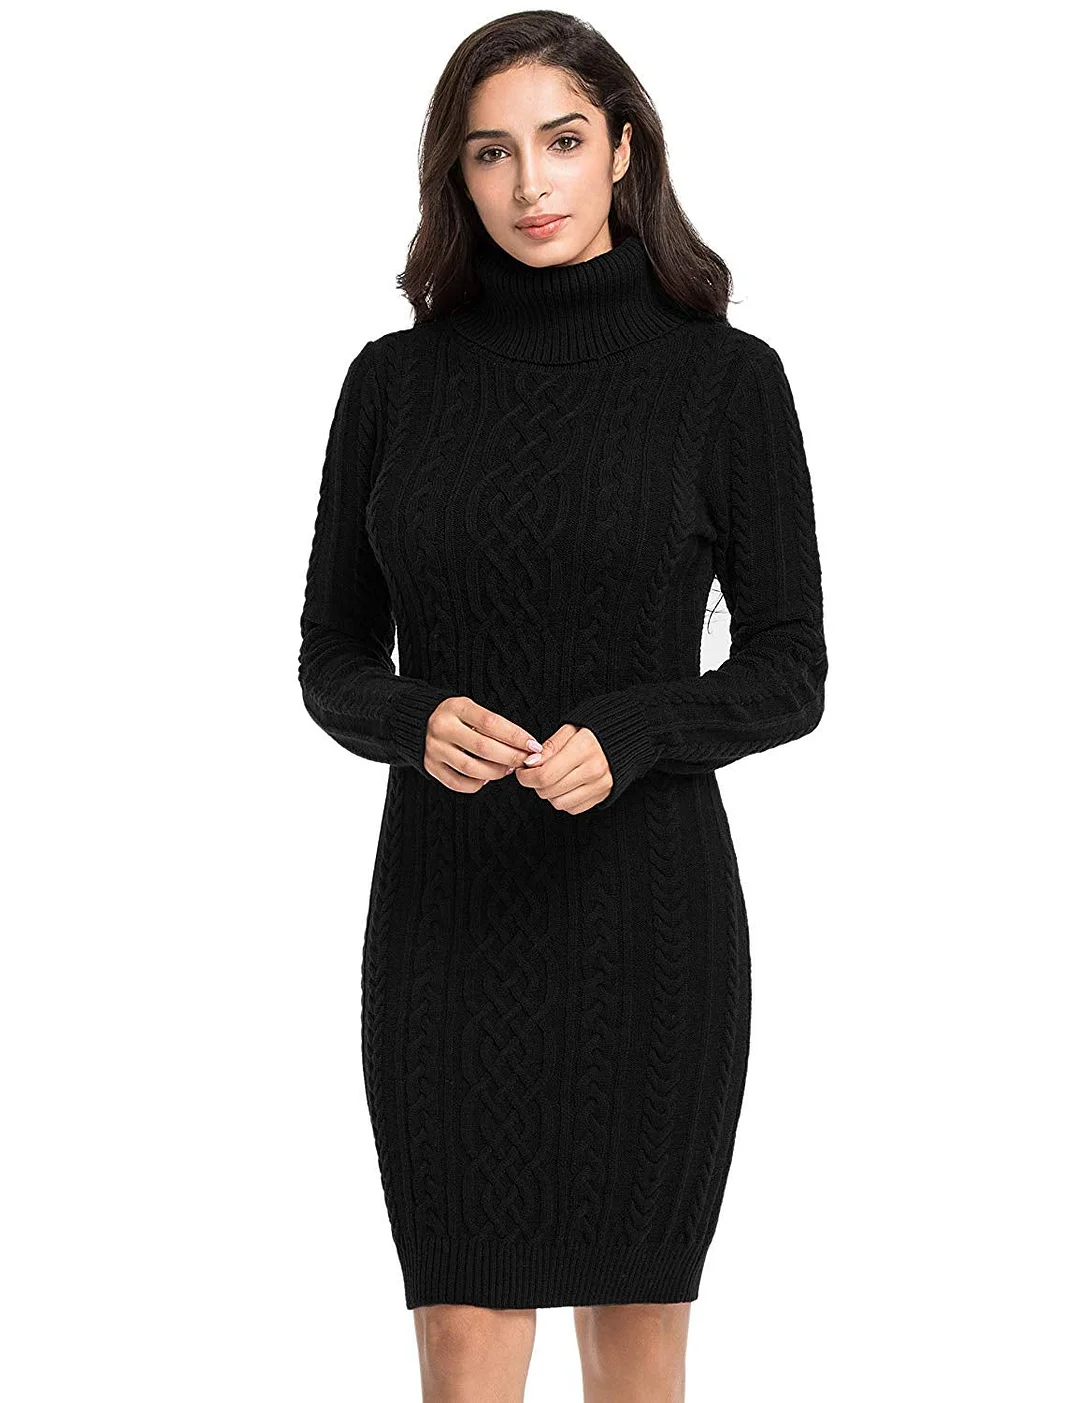 Women's Sweater Dress Cable Knit Slim Fit Turtleneck Sweater